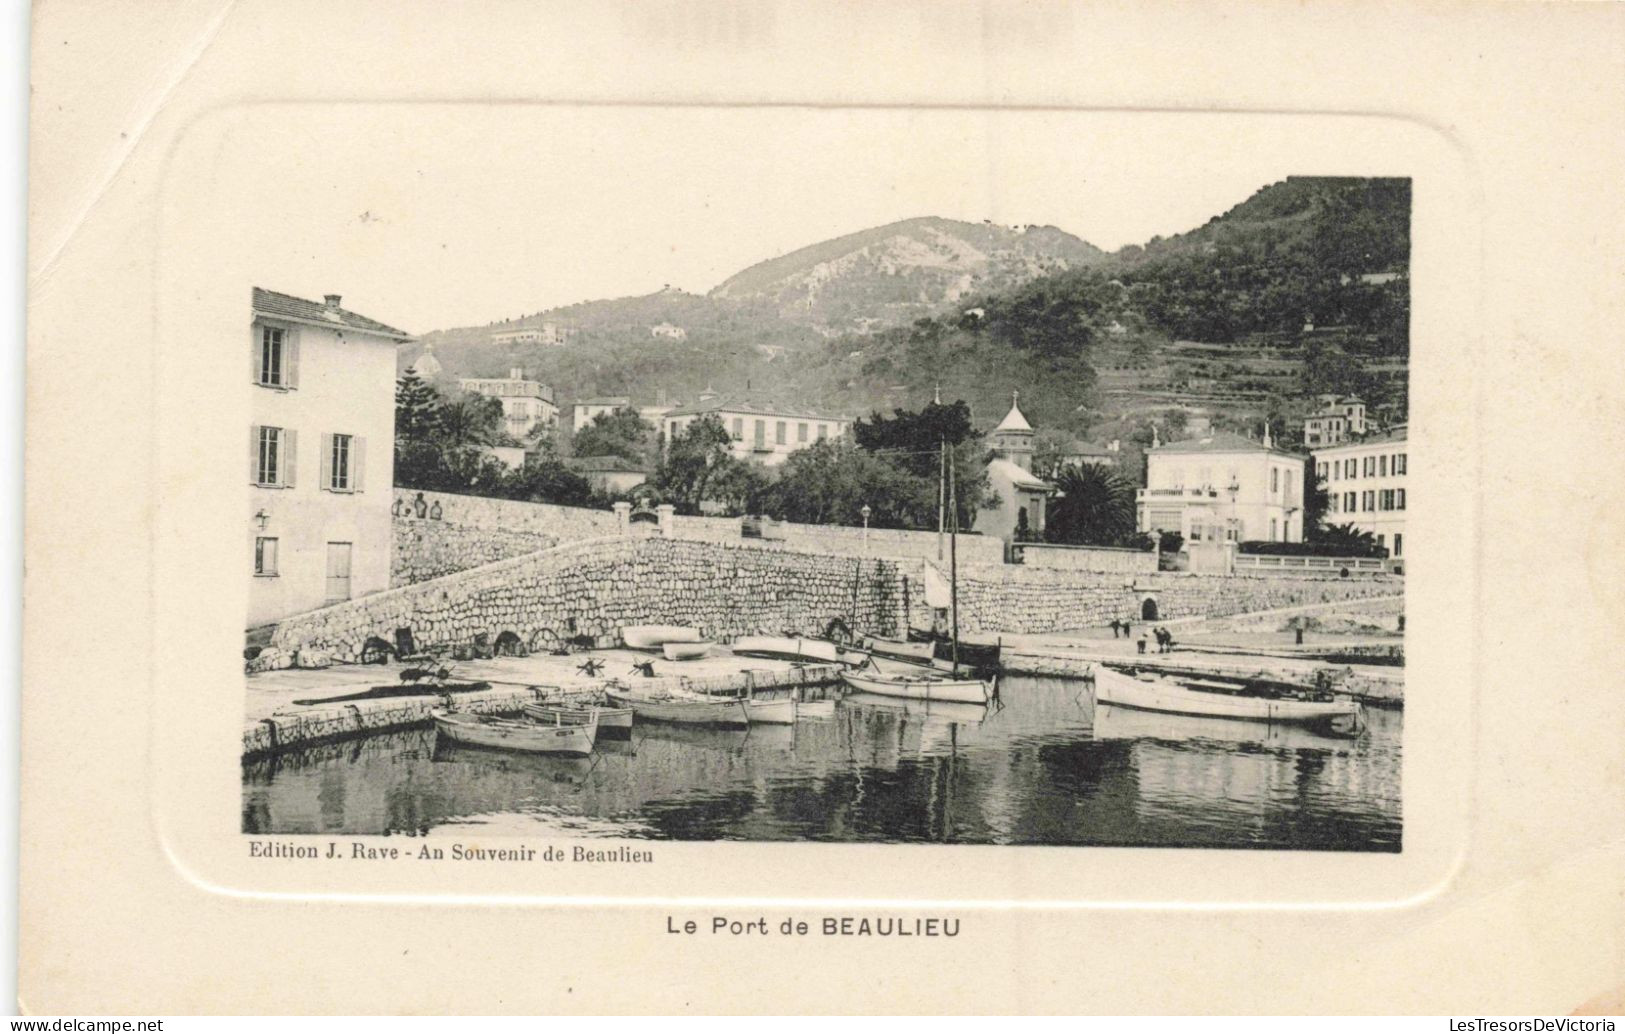 FRANCE - Beaulieu - Le Port De Beaulieu - Souvenir De Beaulieu - Edit J Rave - Carte Postale Ancienne - Beaulieu-sur-Mer